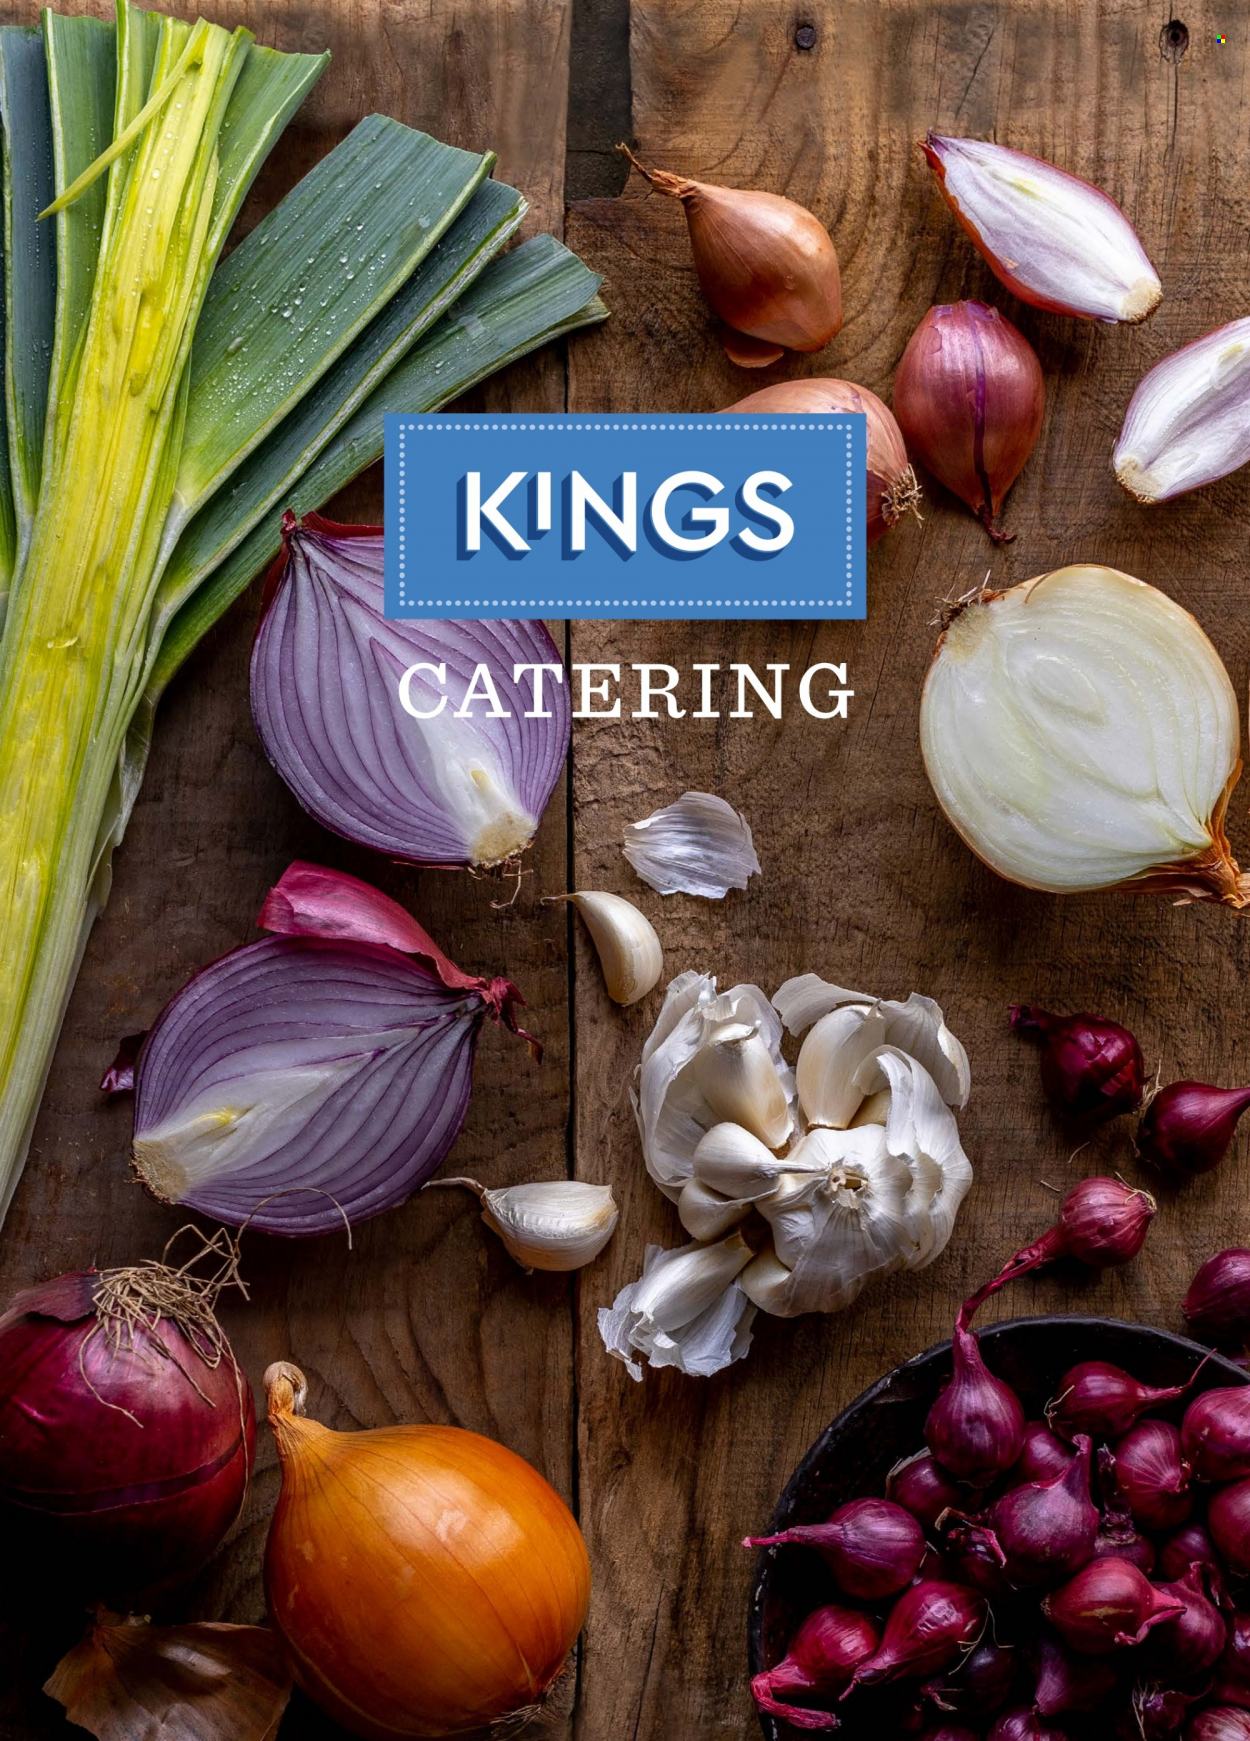 Kings Food Markets ad .